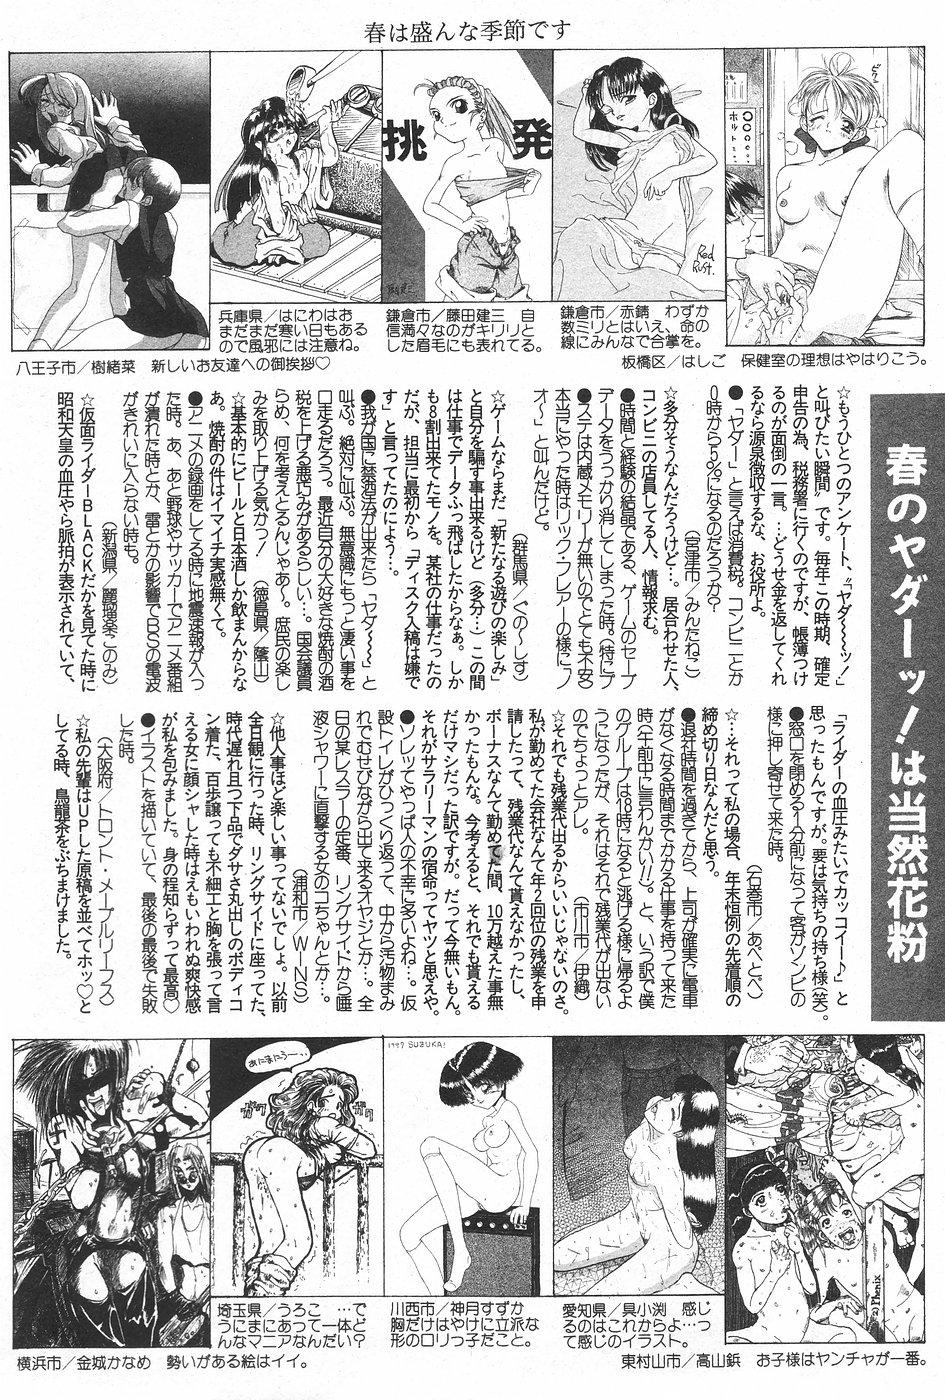 Manga Hotmilk 1997-05 173